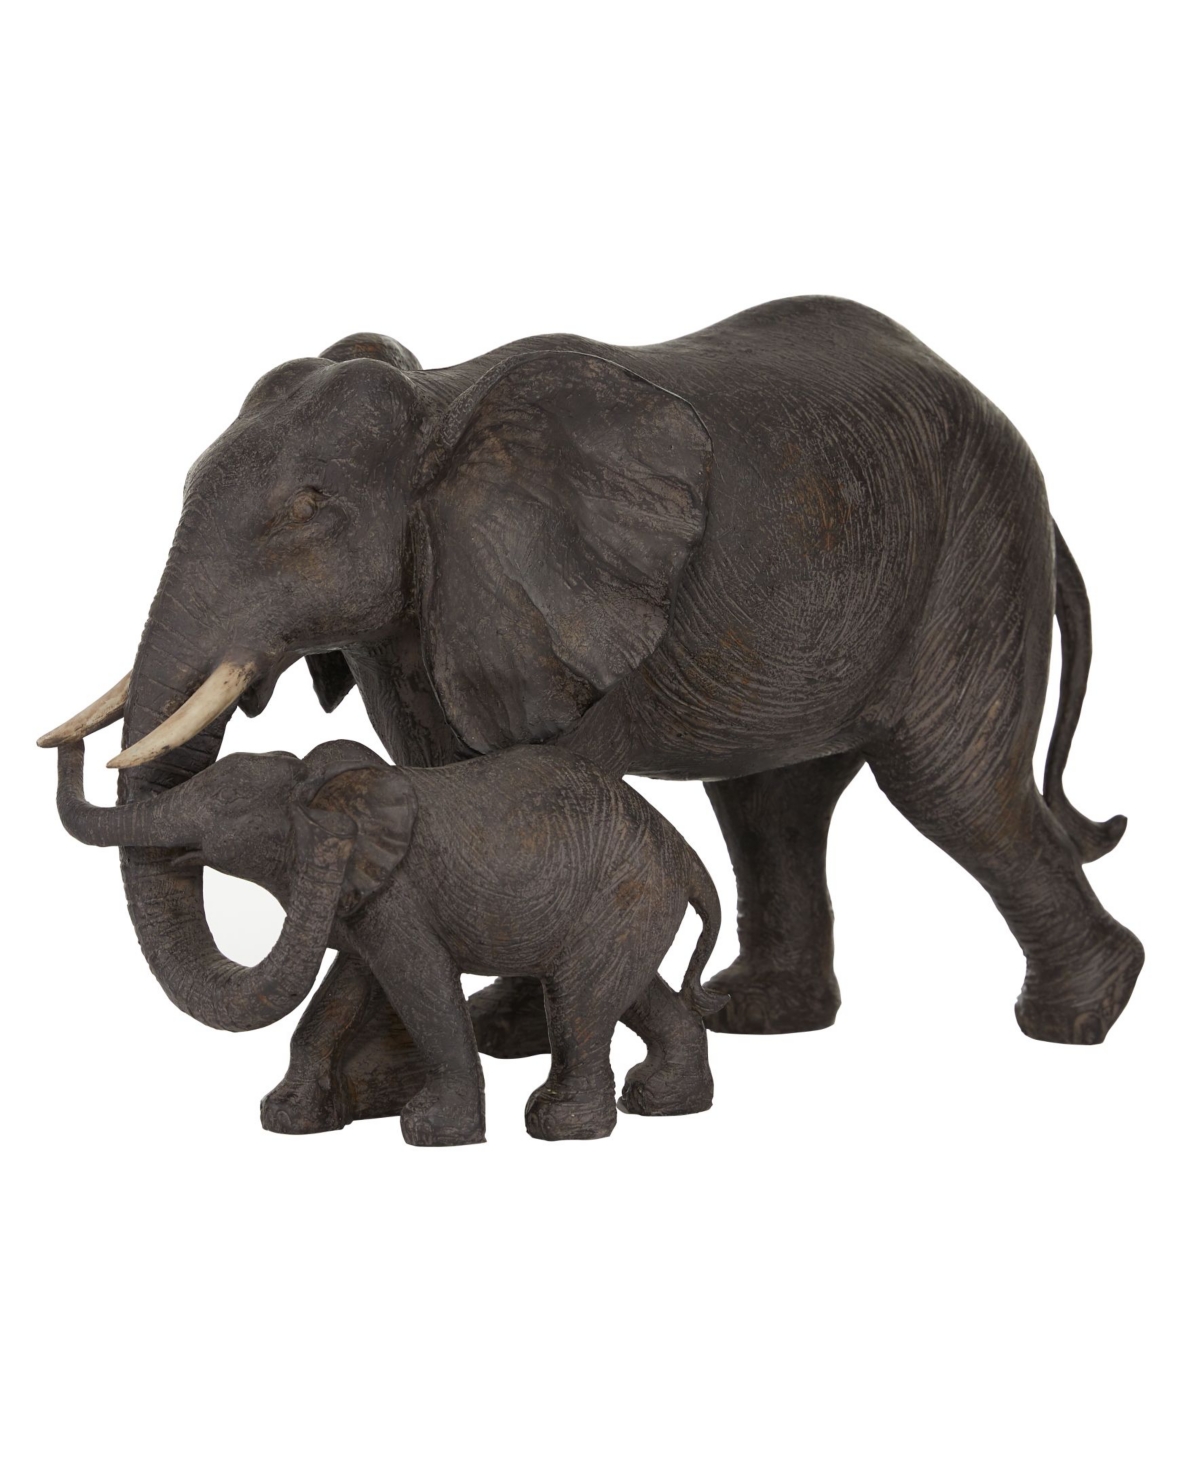 Rosemary Lane Dark Eclectic Resin Elephant Sculpture, 9" X 14" In Brown